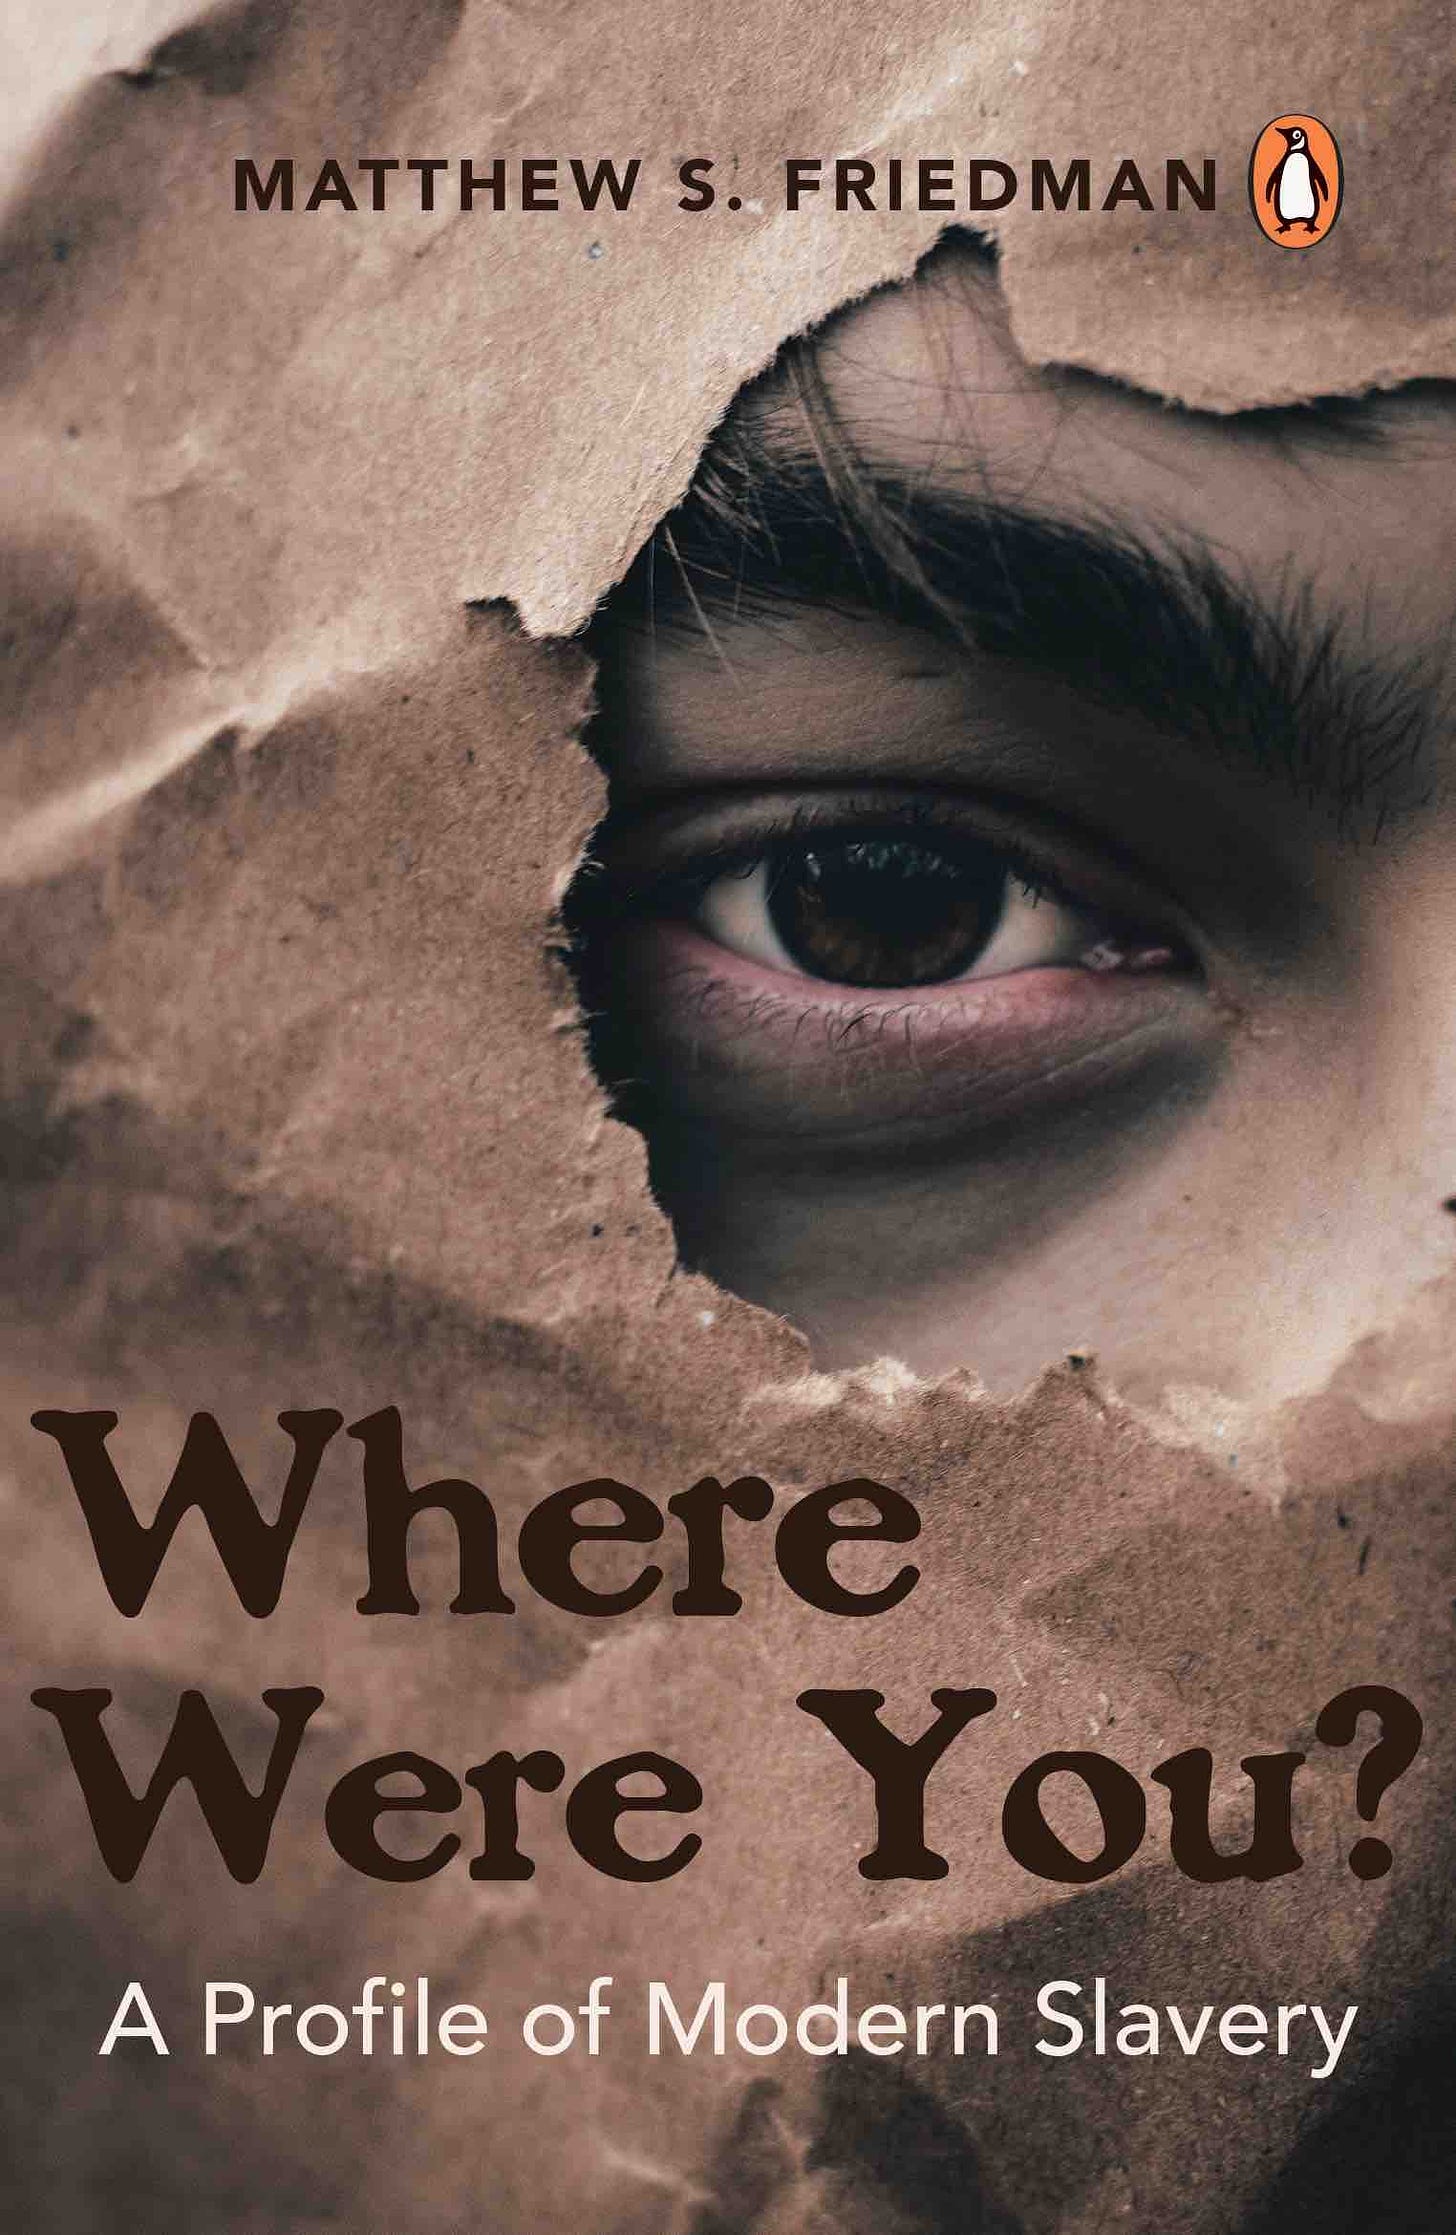 Where Were You? A Profile on Modern Slavery by Matthew S. Friedman